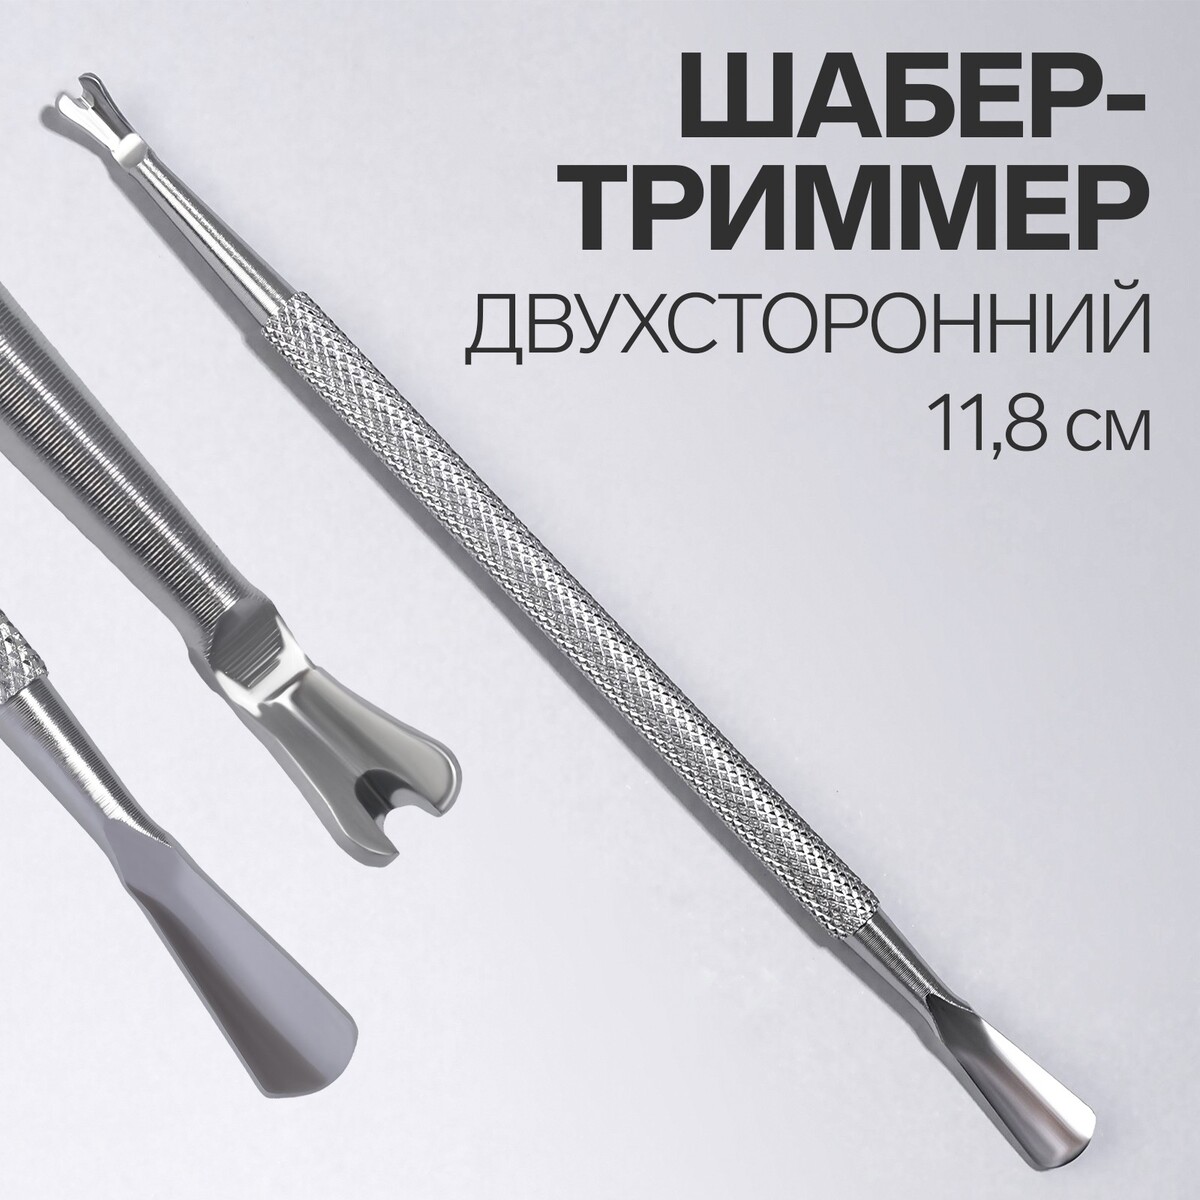 Шабер-триммер, двусторонний, 11,8 см, цвет серебристый триммер panasonic er gd61 k520 серебристый